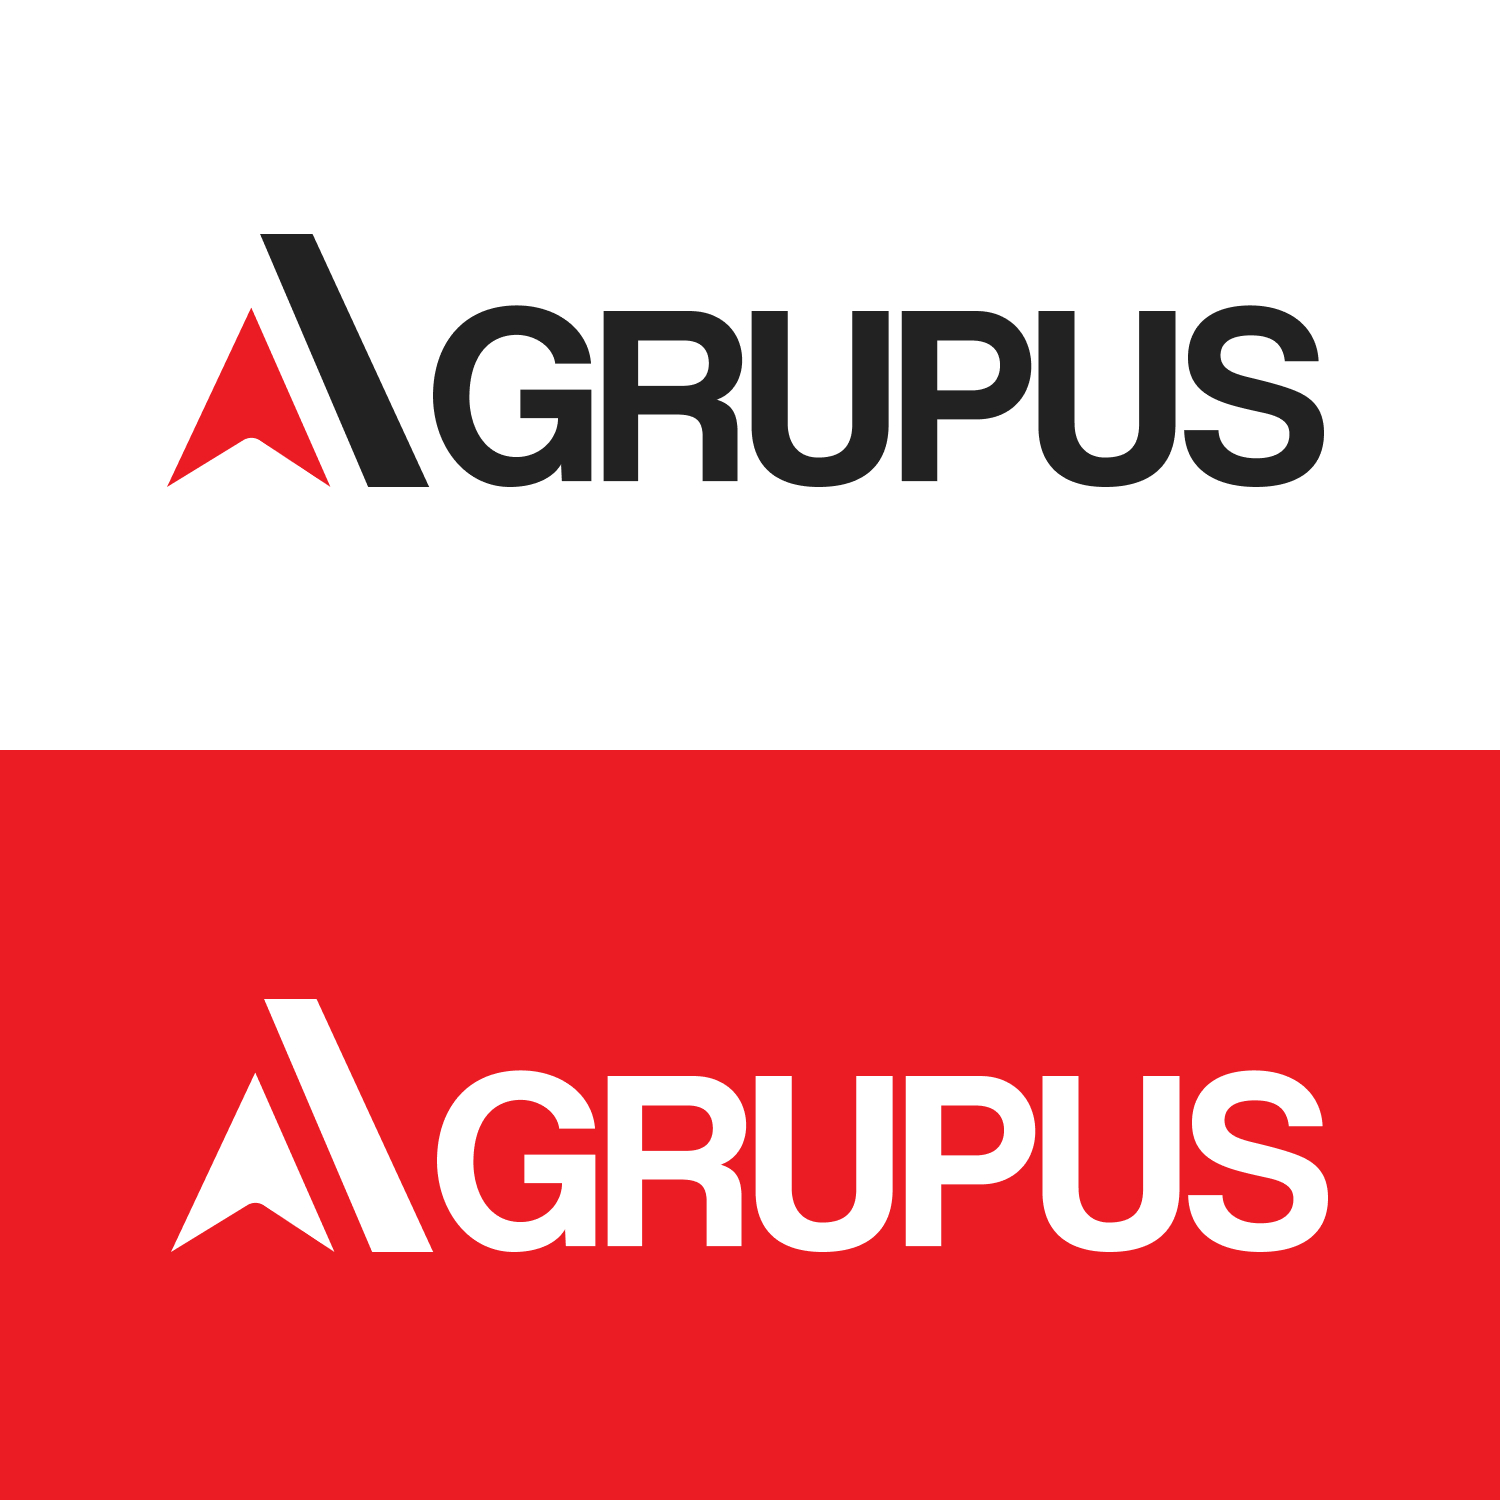 Agrupus logotipo kūrimas